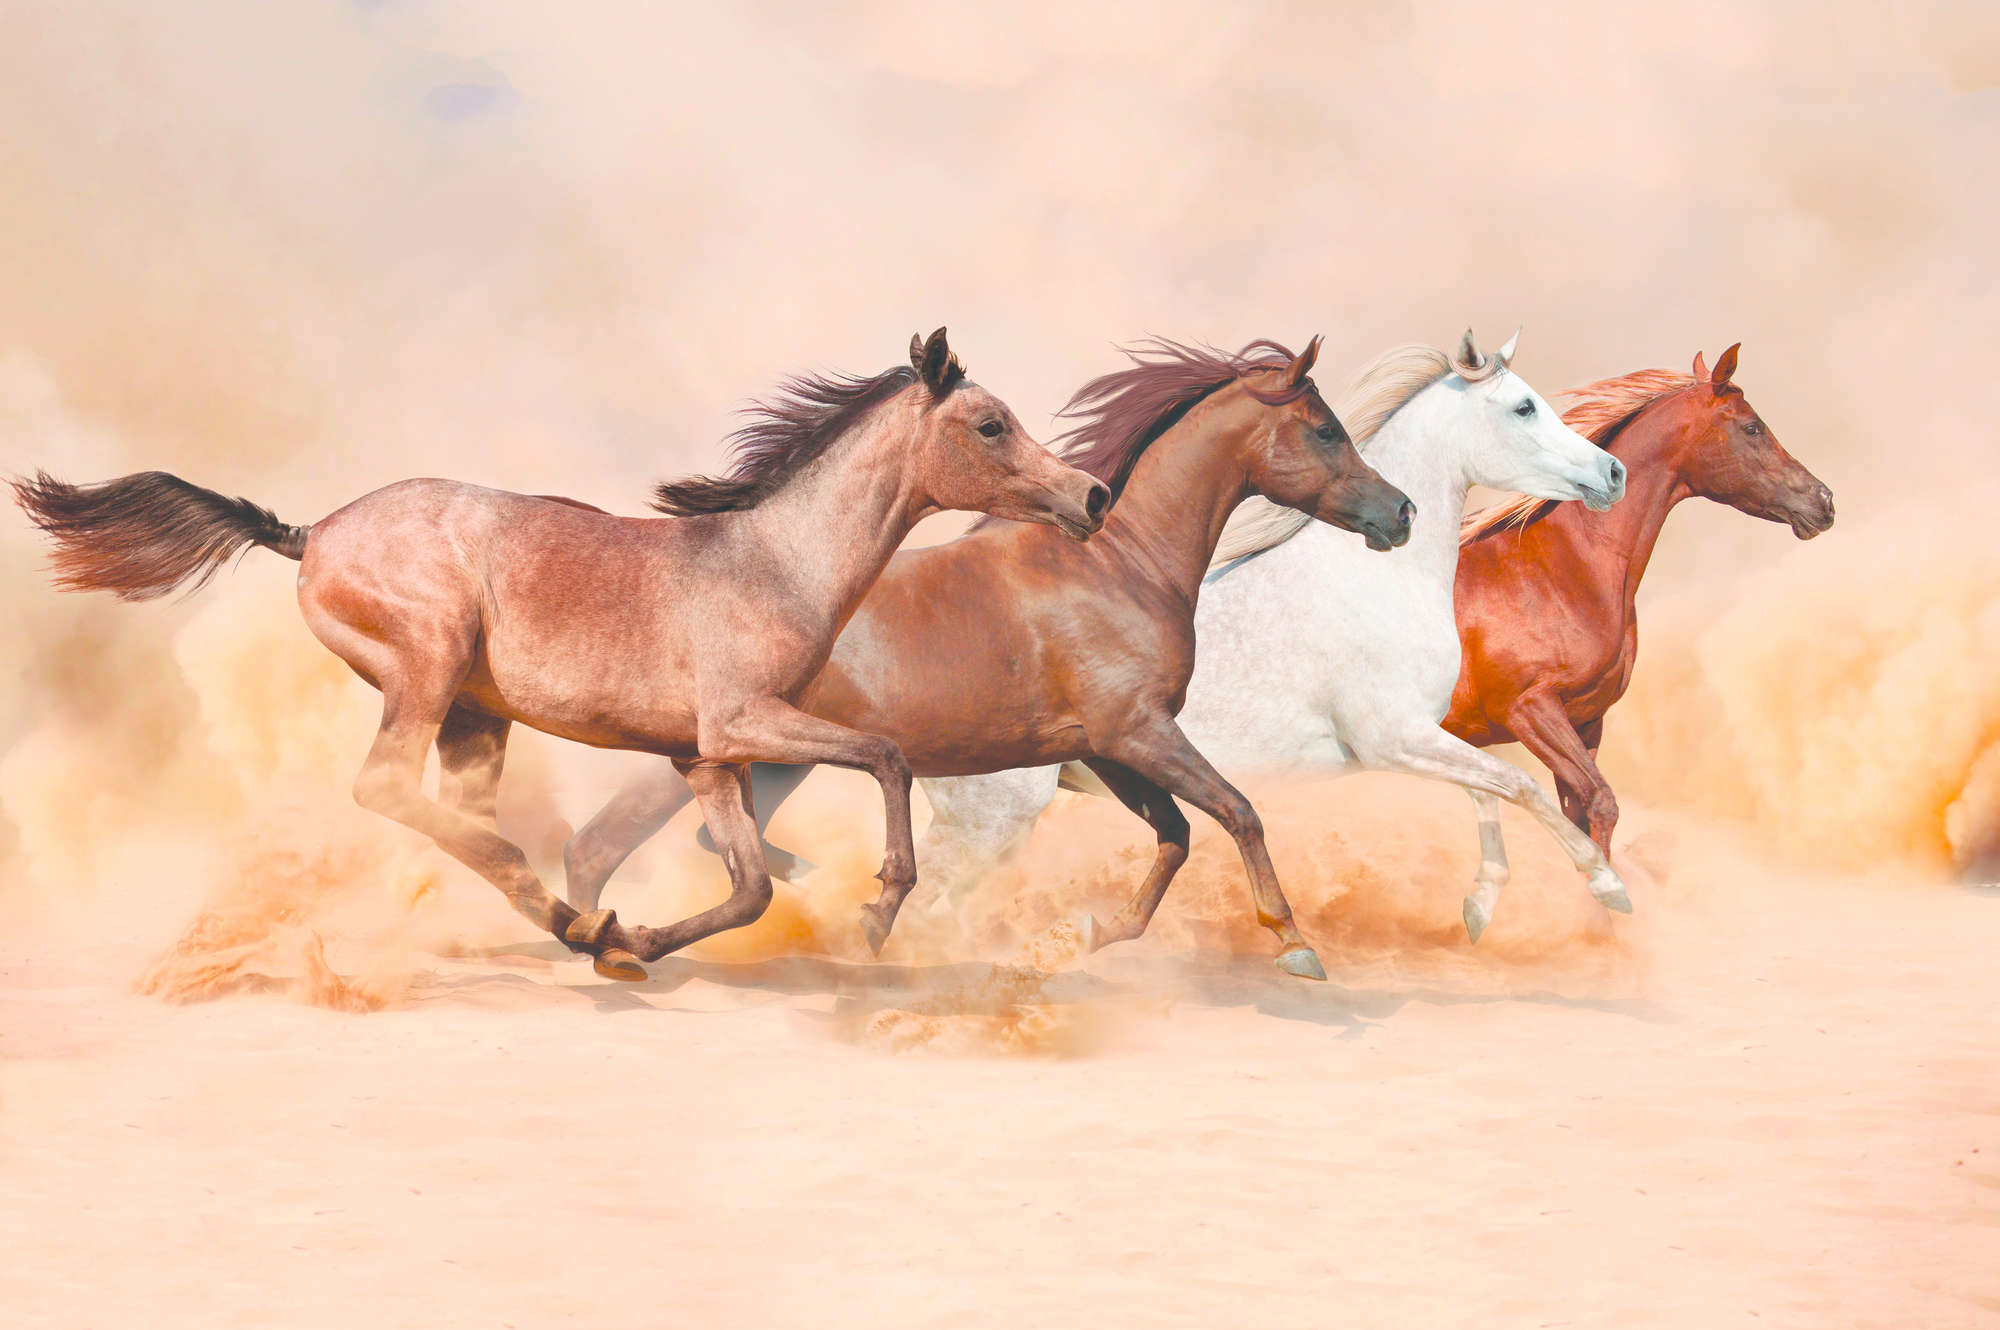             Horses mural with galloping herd on matt smooth fleece
        